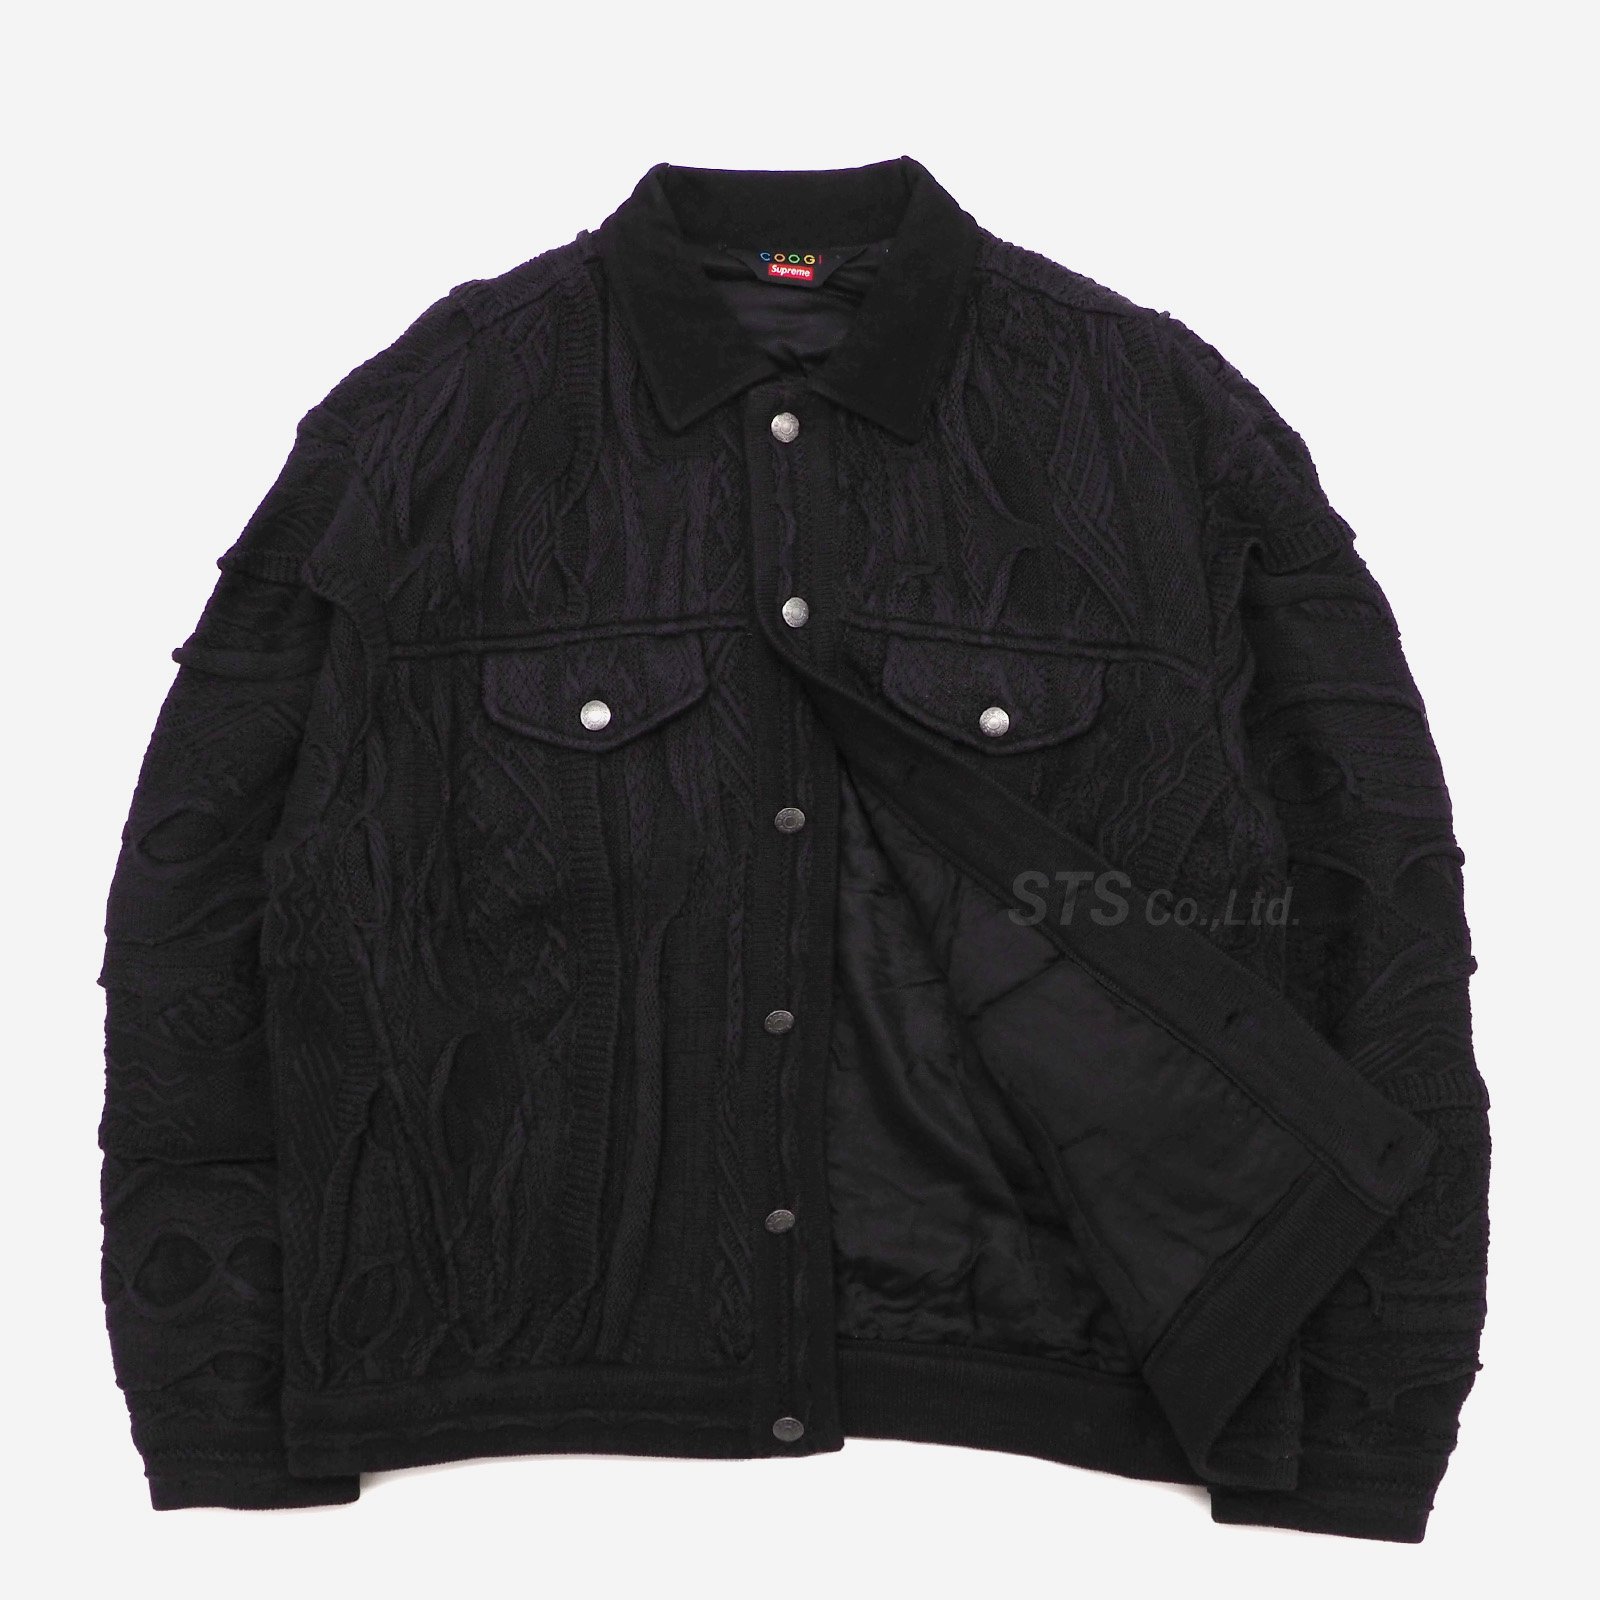 Supreme / Coogi Trucker Jacket "Black"